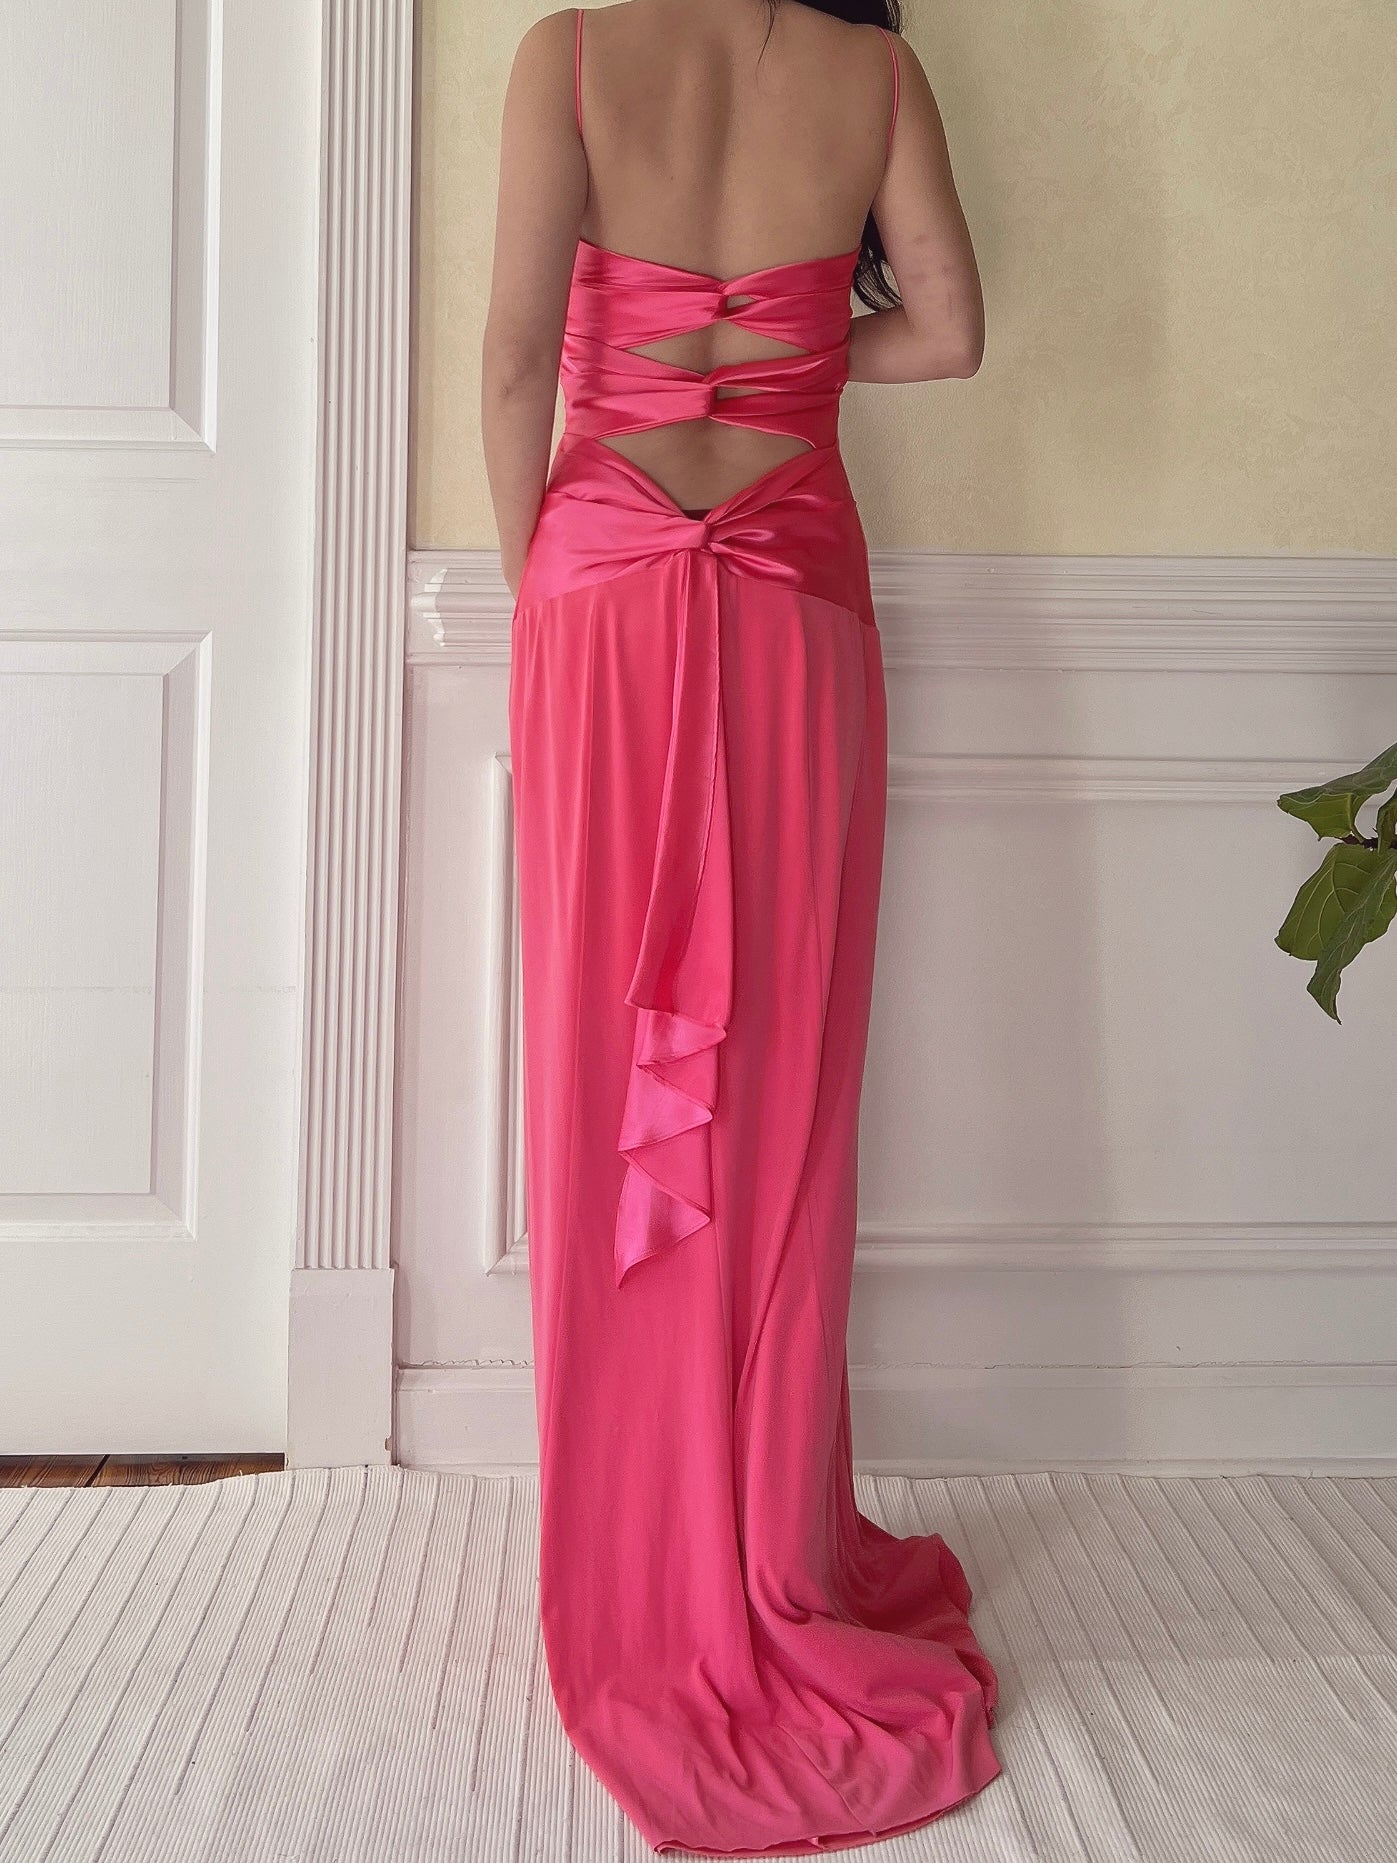 Vintage Hot Pink Jersey Dress - M